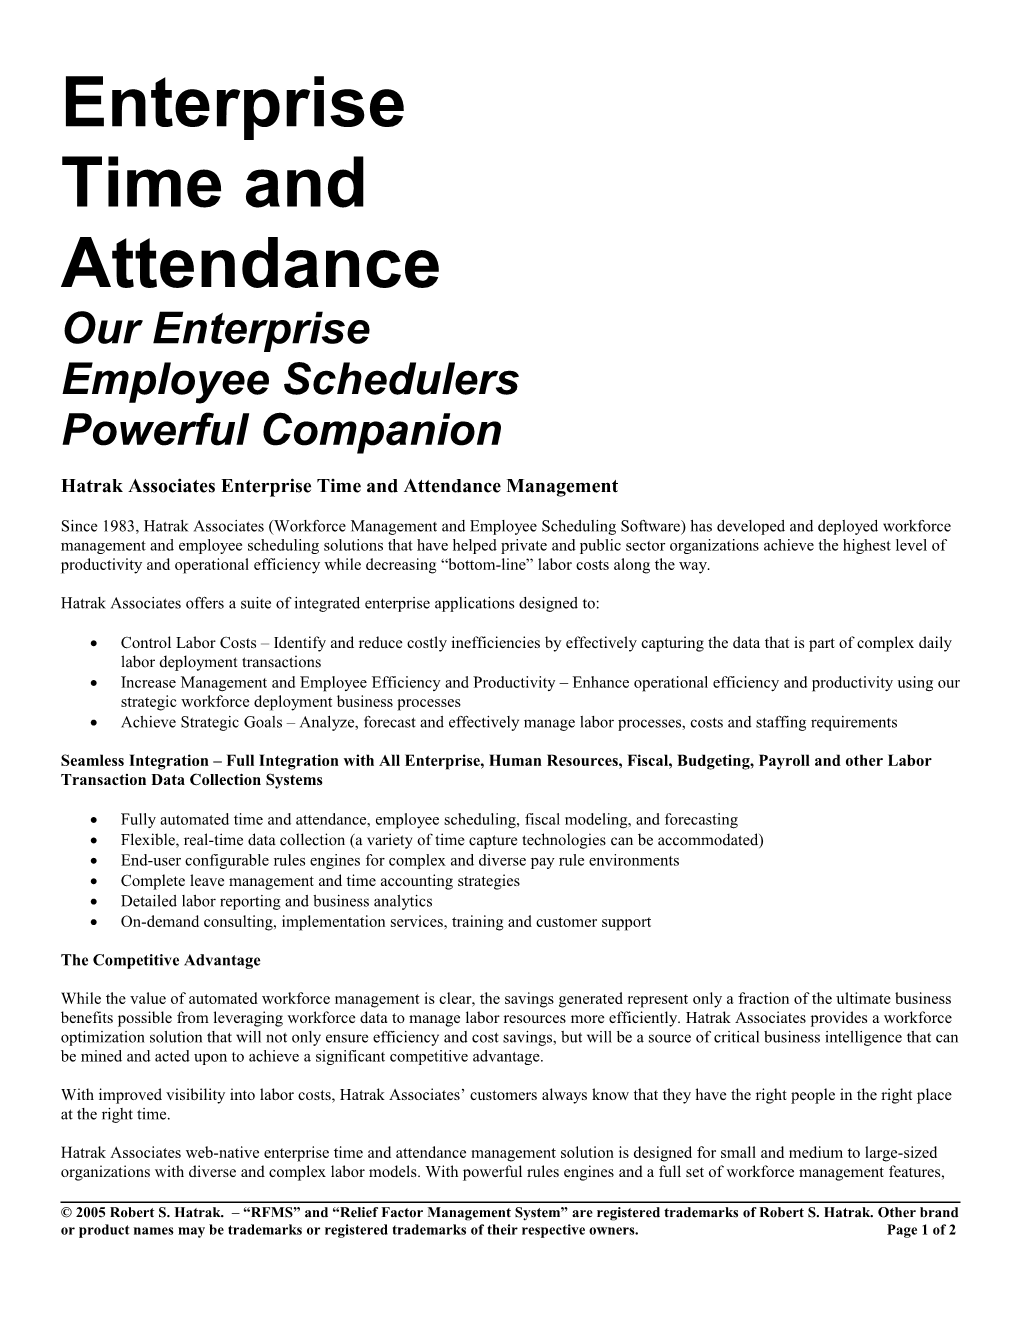 Enterprise Time and Labor Management